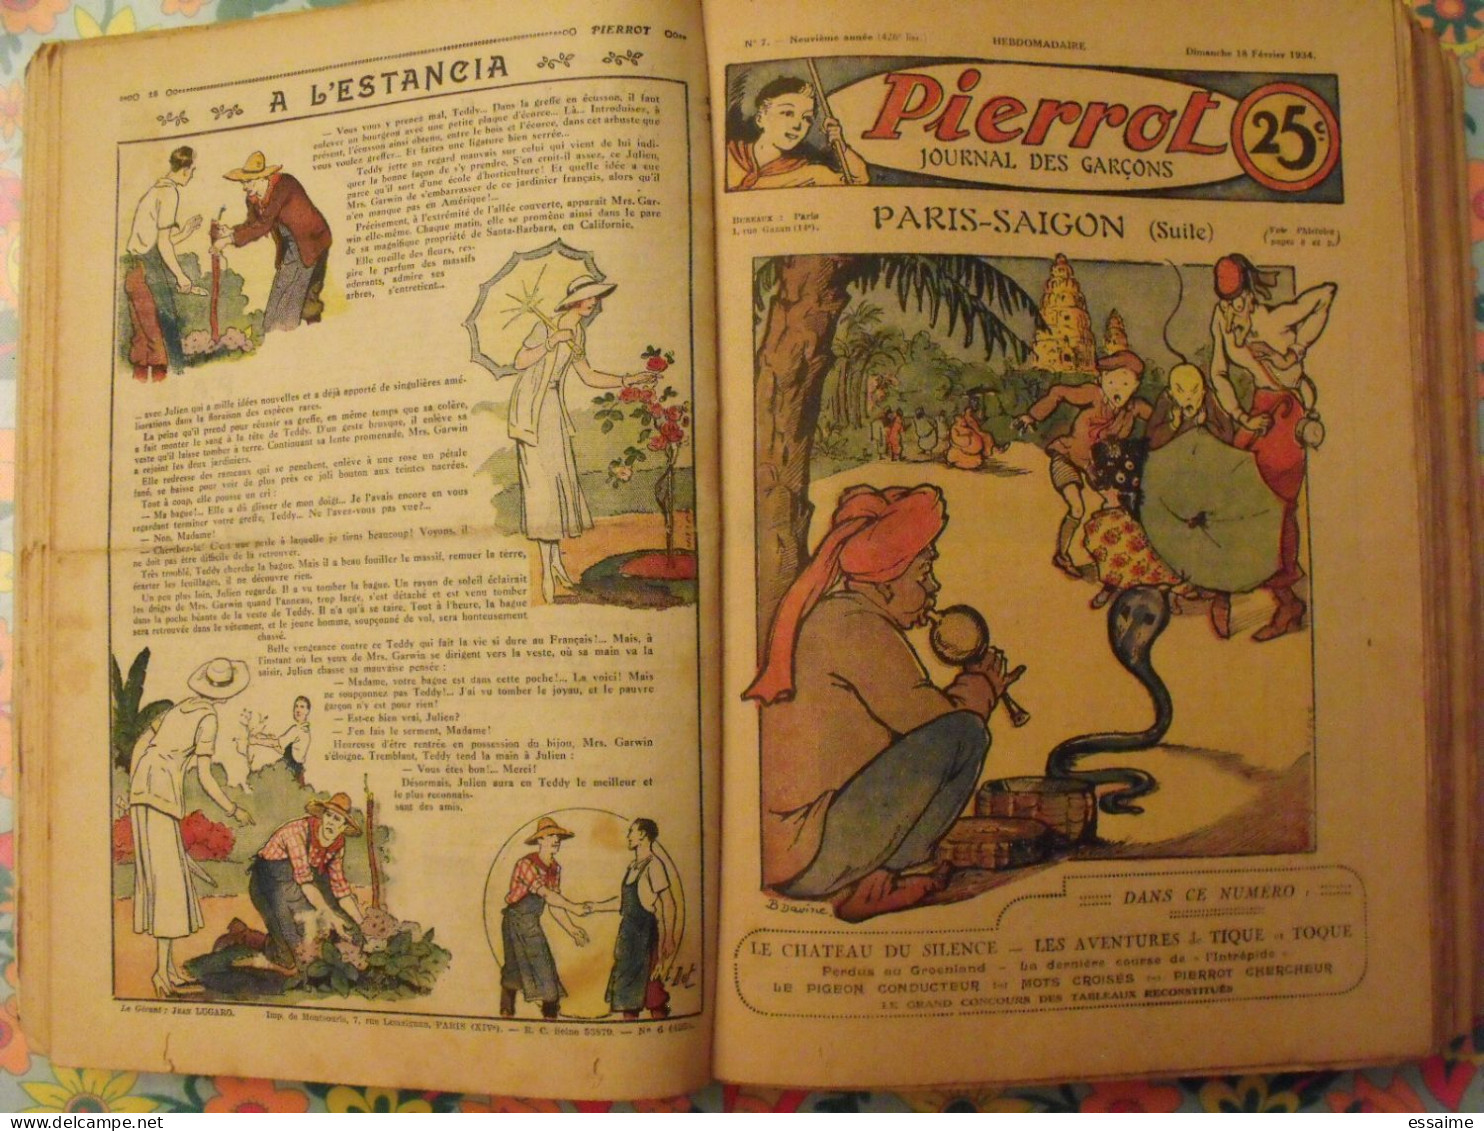 Pierrot reliure de 52 n° de 1934. n°1 à 52.  pitche, costo marijac jeanjean aviation le rallic dot bourdin cuvillier